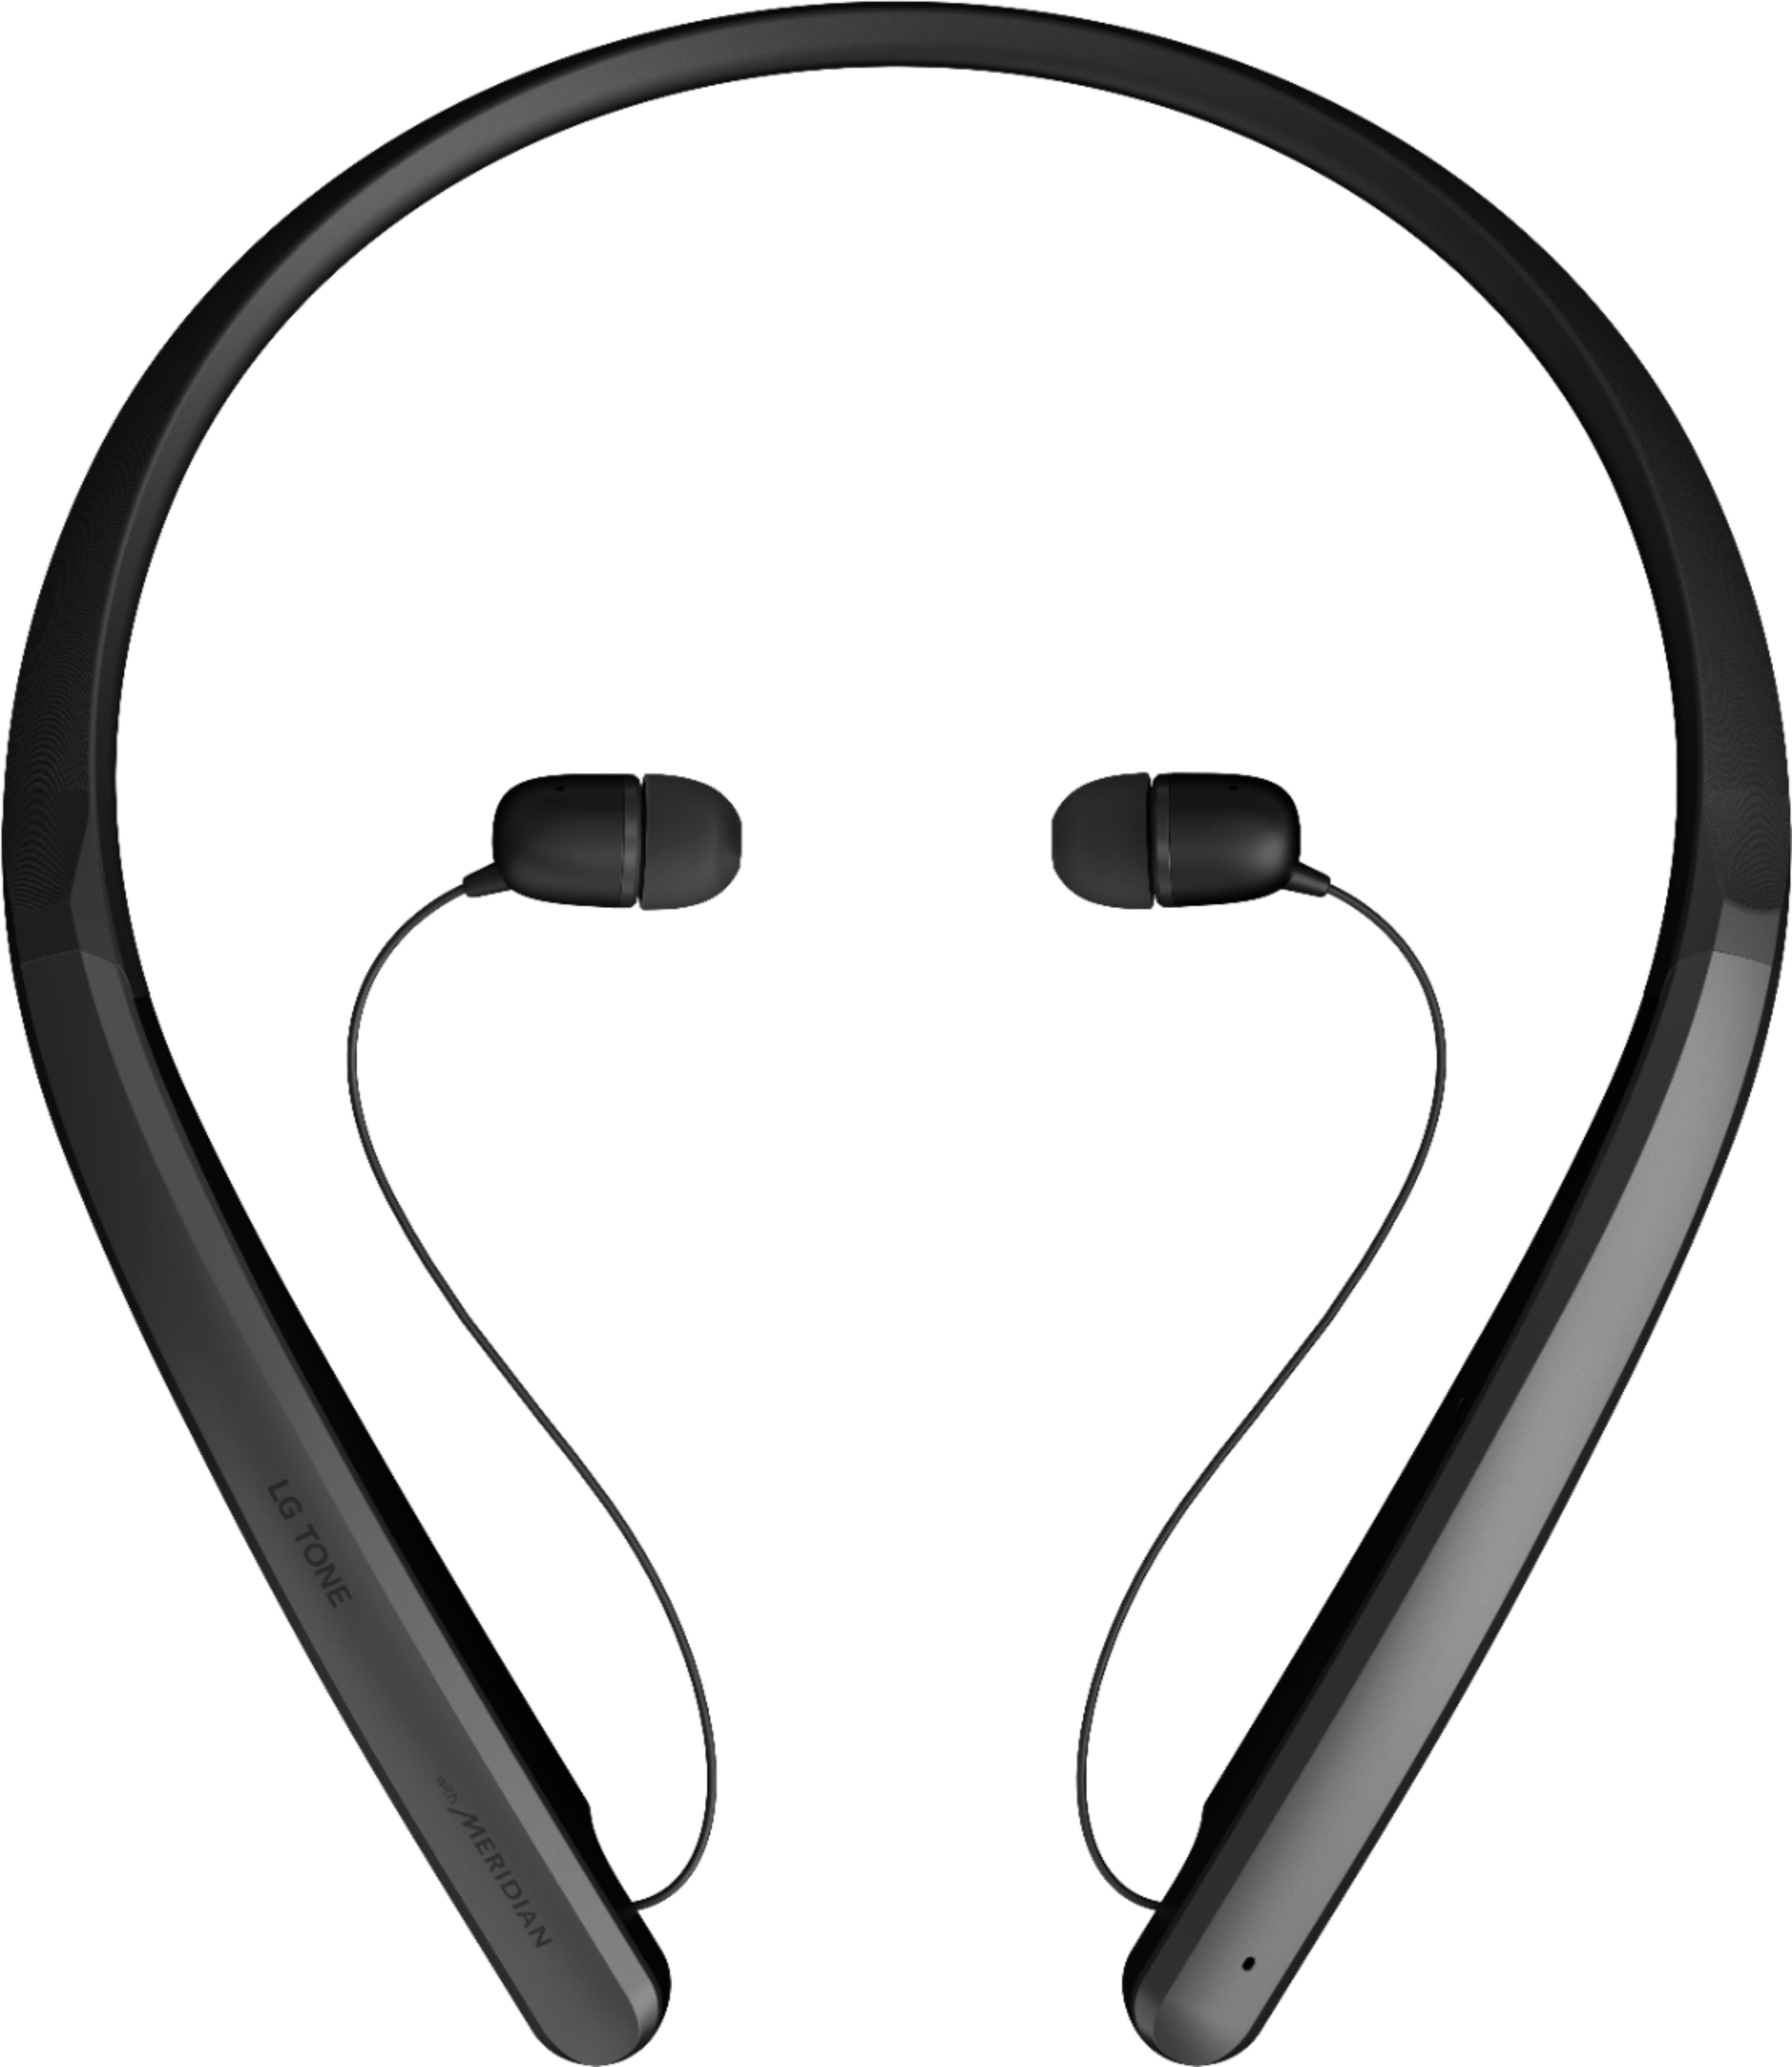 Angle View: LG - Geek Squad Certified Refurbished TONE Flex HBS-XL7 Wireless In-Ear Headphones - Black